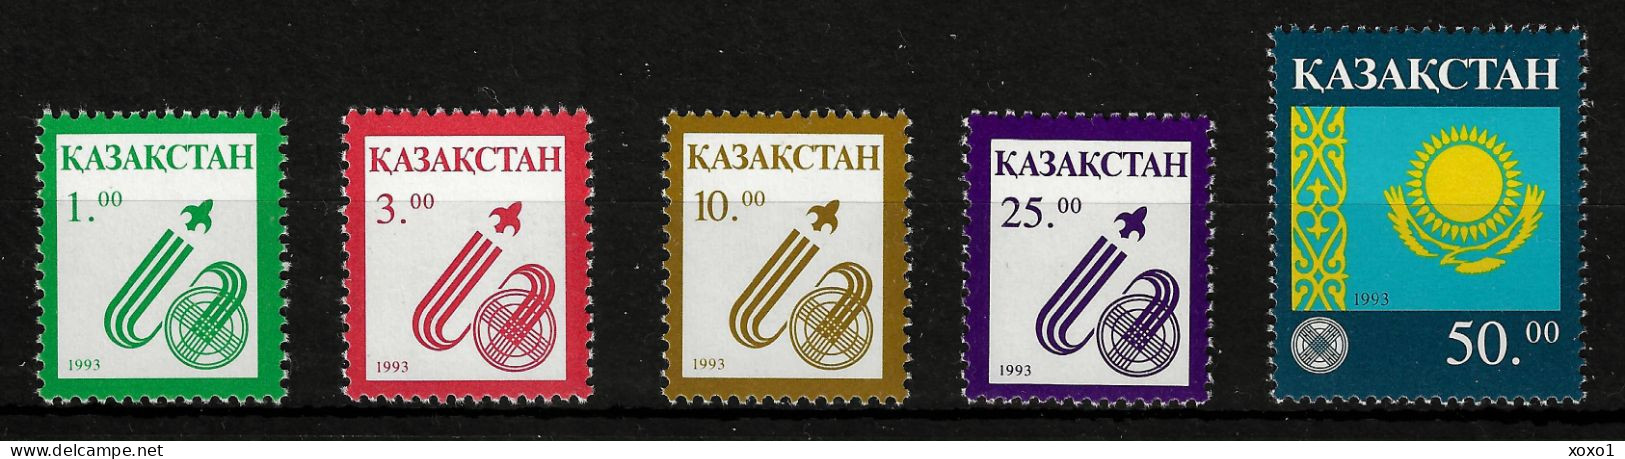 Kazakhstan 1993 MiNr. 18 - 22 Kasachstan ​​​​​​​National Symbols, Shanirak, Flag 5v MNH** 3.00 € - Francobolli